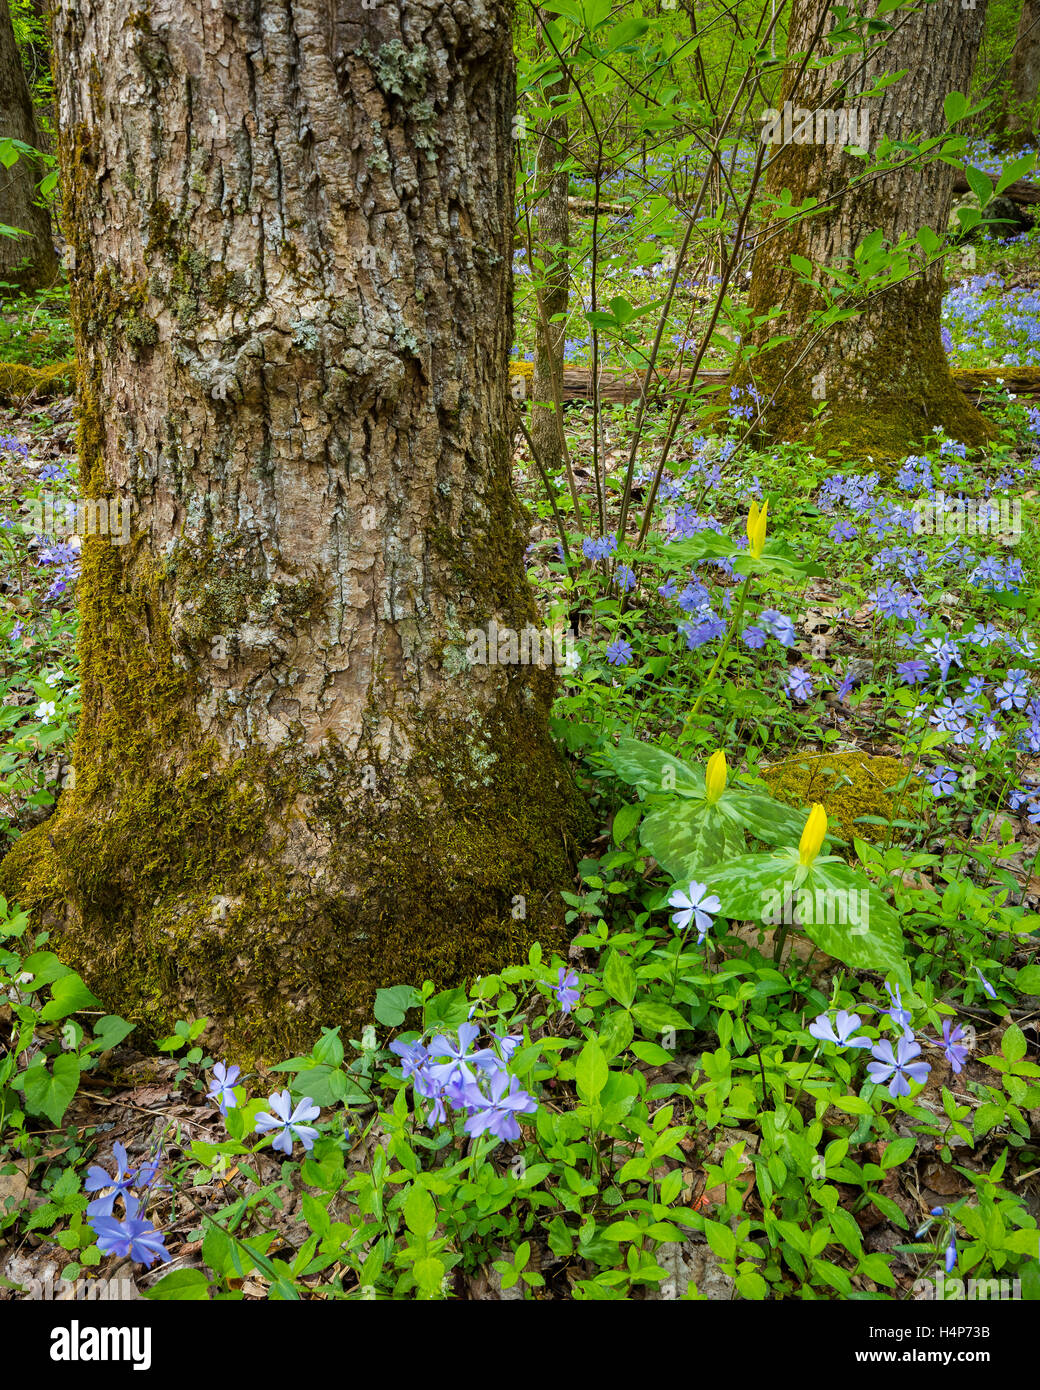 Great Smoky Mountains National Park, Tennessee: Wild blue phlox (Phlox divaricata) and yellow trillium (Trillium luteum) bloomin Stock Photo